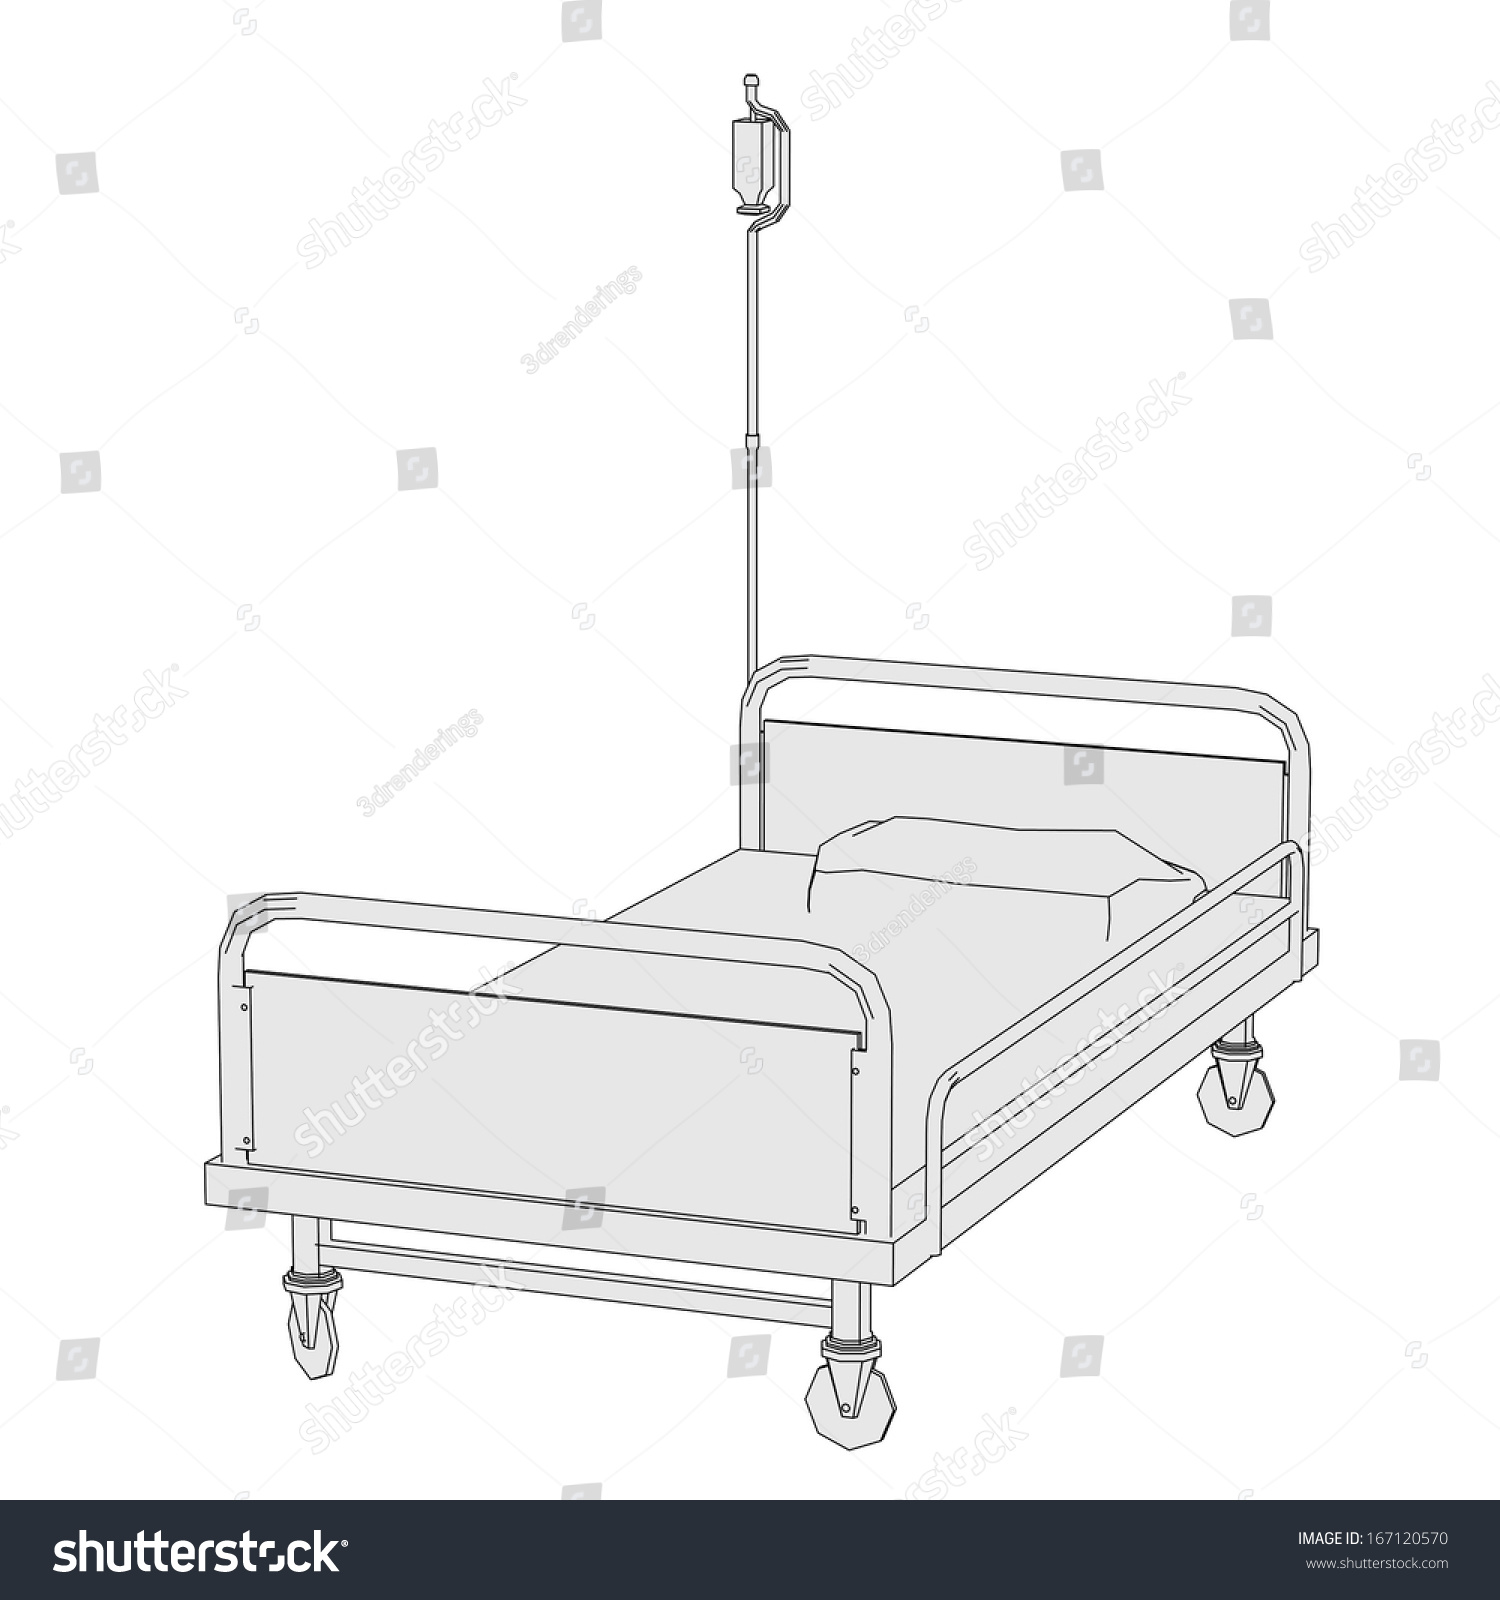 Cartoon Image Of Hospital Bed Stock Photo 167120570 : Shutterstock